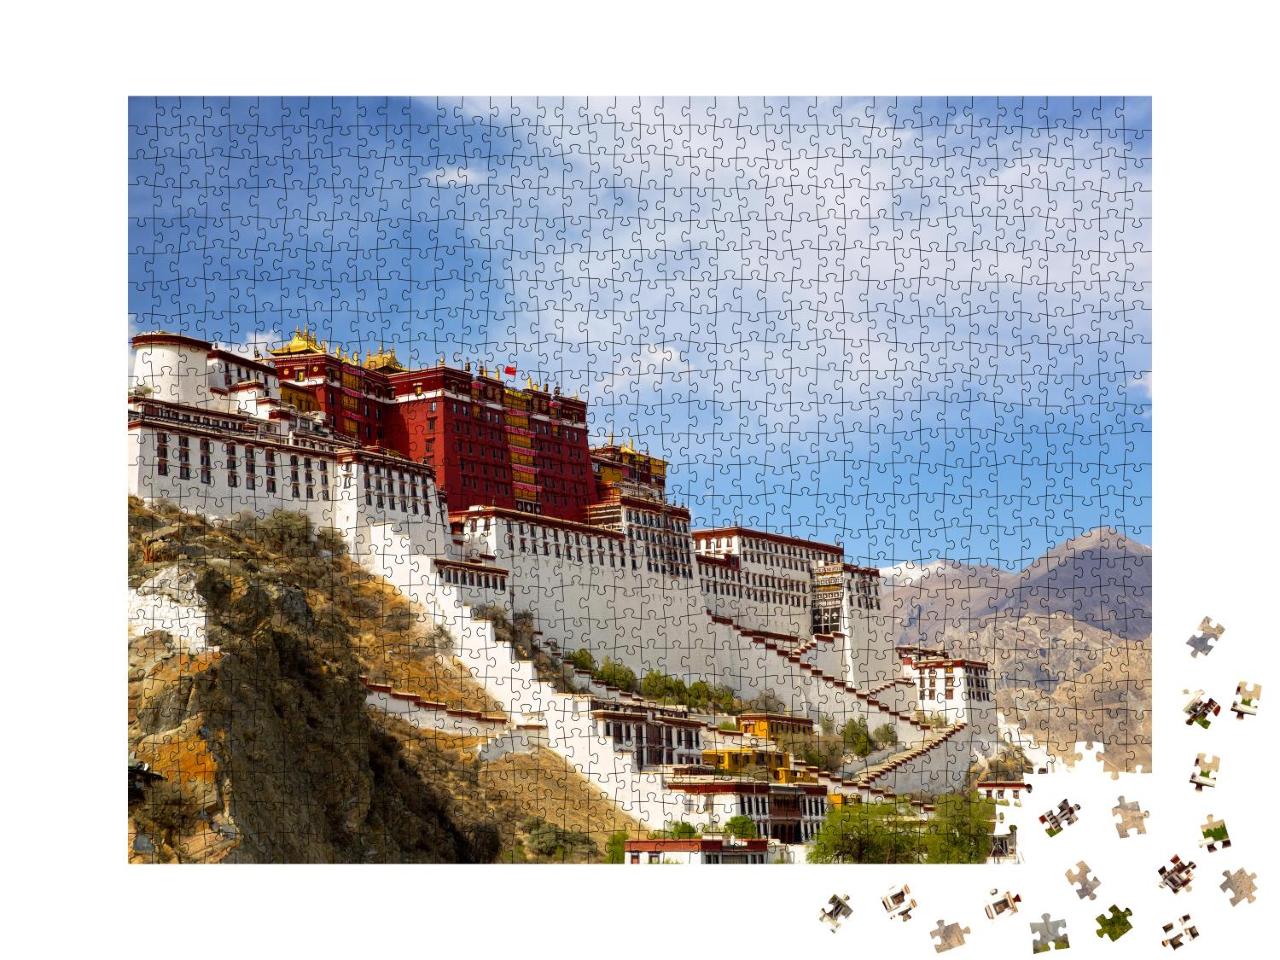 Puzzle 1000 Teile „Potala-Palast in Lhasa, Tibet“